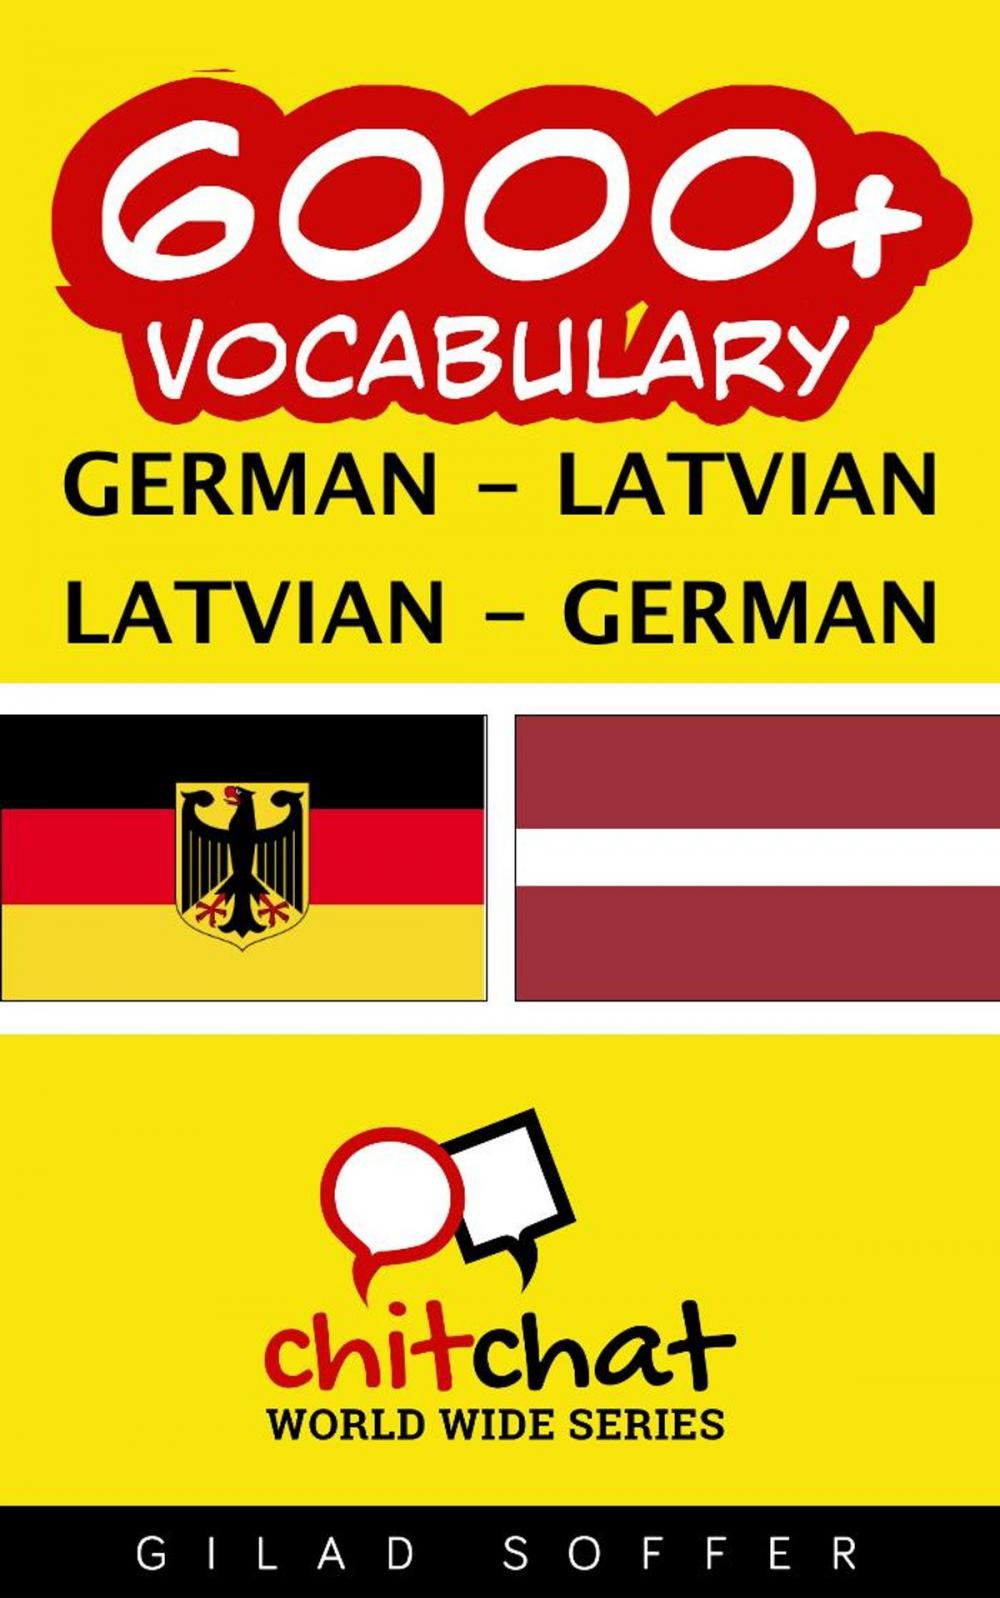 Big bigCover of 6000+ Vocabulary German - Latvian